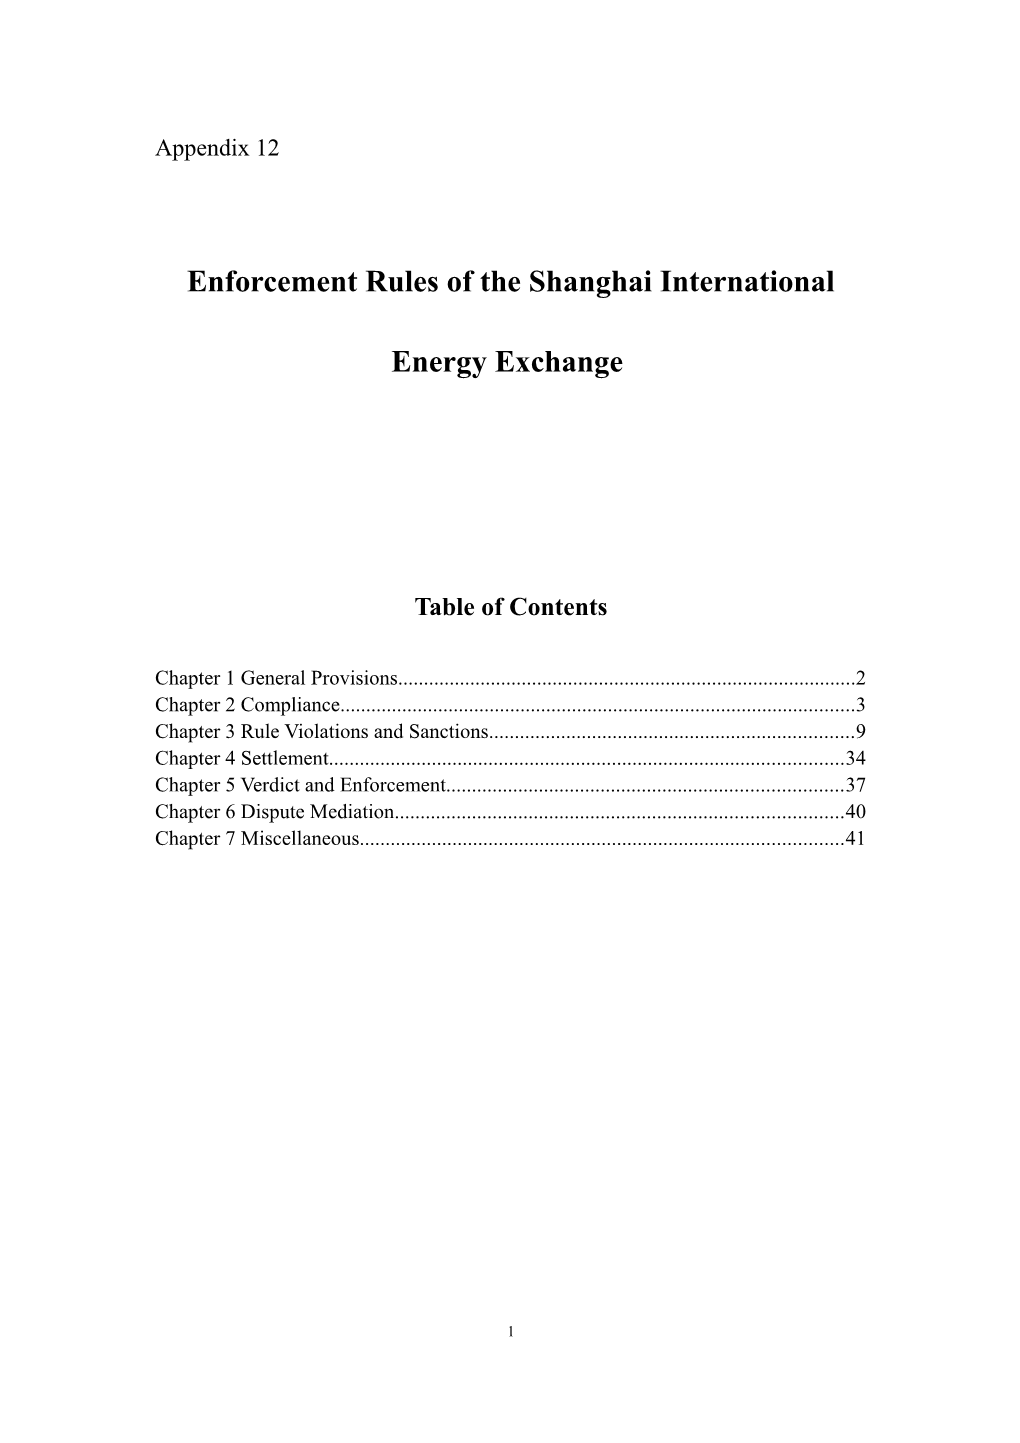 Enforcement Rules of the Shanghai International Energy Exchange (Draft)